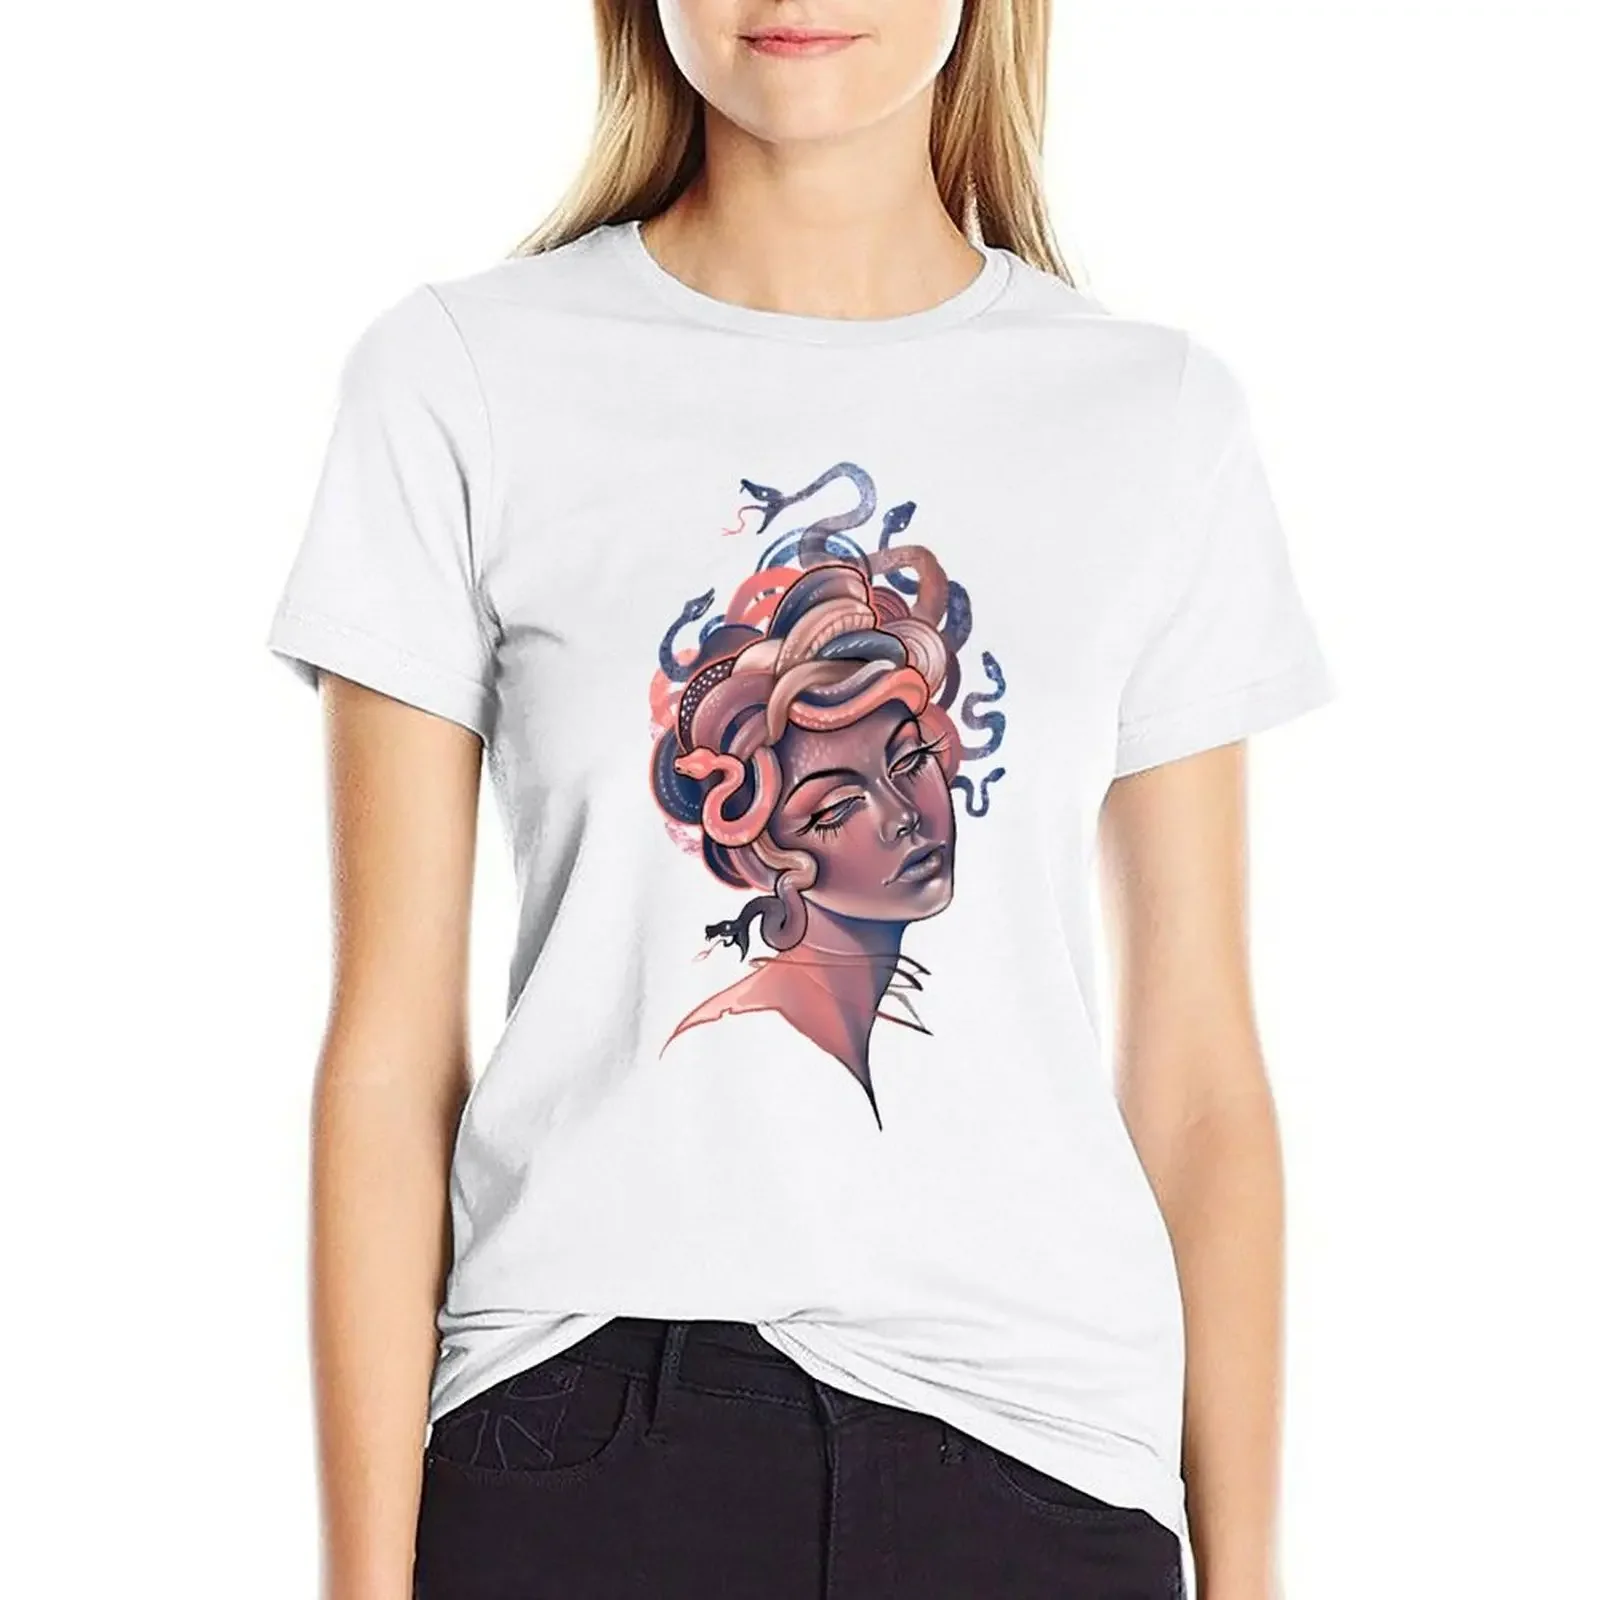 

Coral and blue Medusa portrait T-shirt lady clothes summer clothes cat shirts for Women